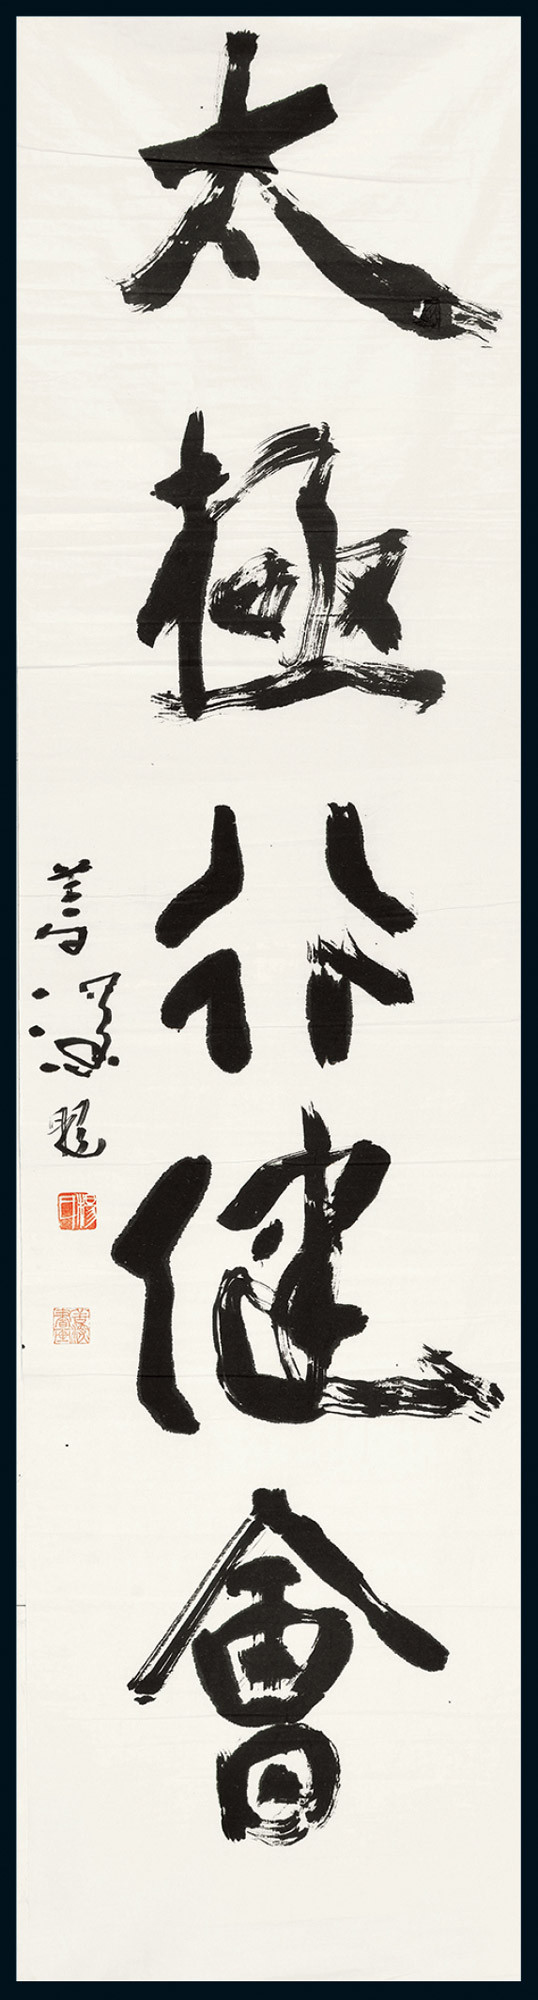 Calligraphy by Yang Shan-sheng